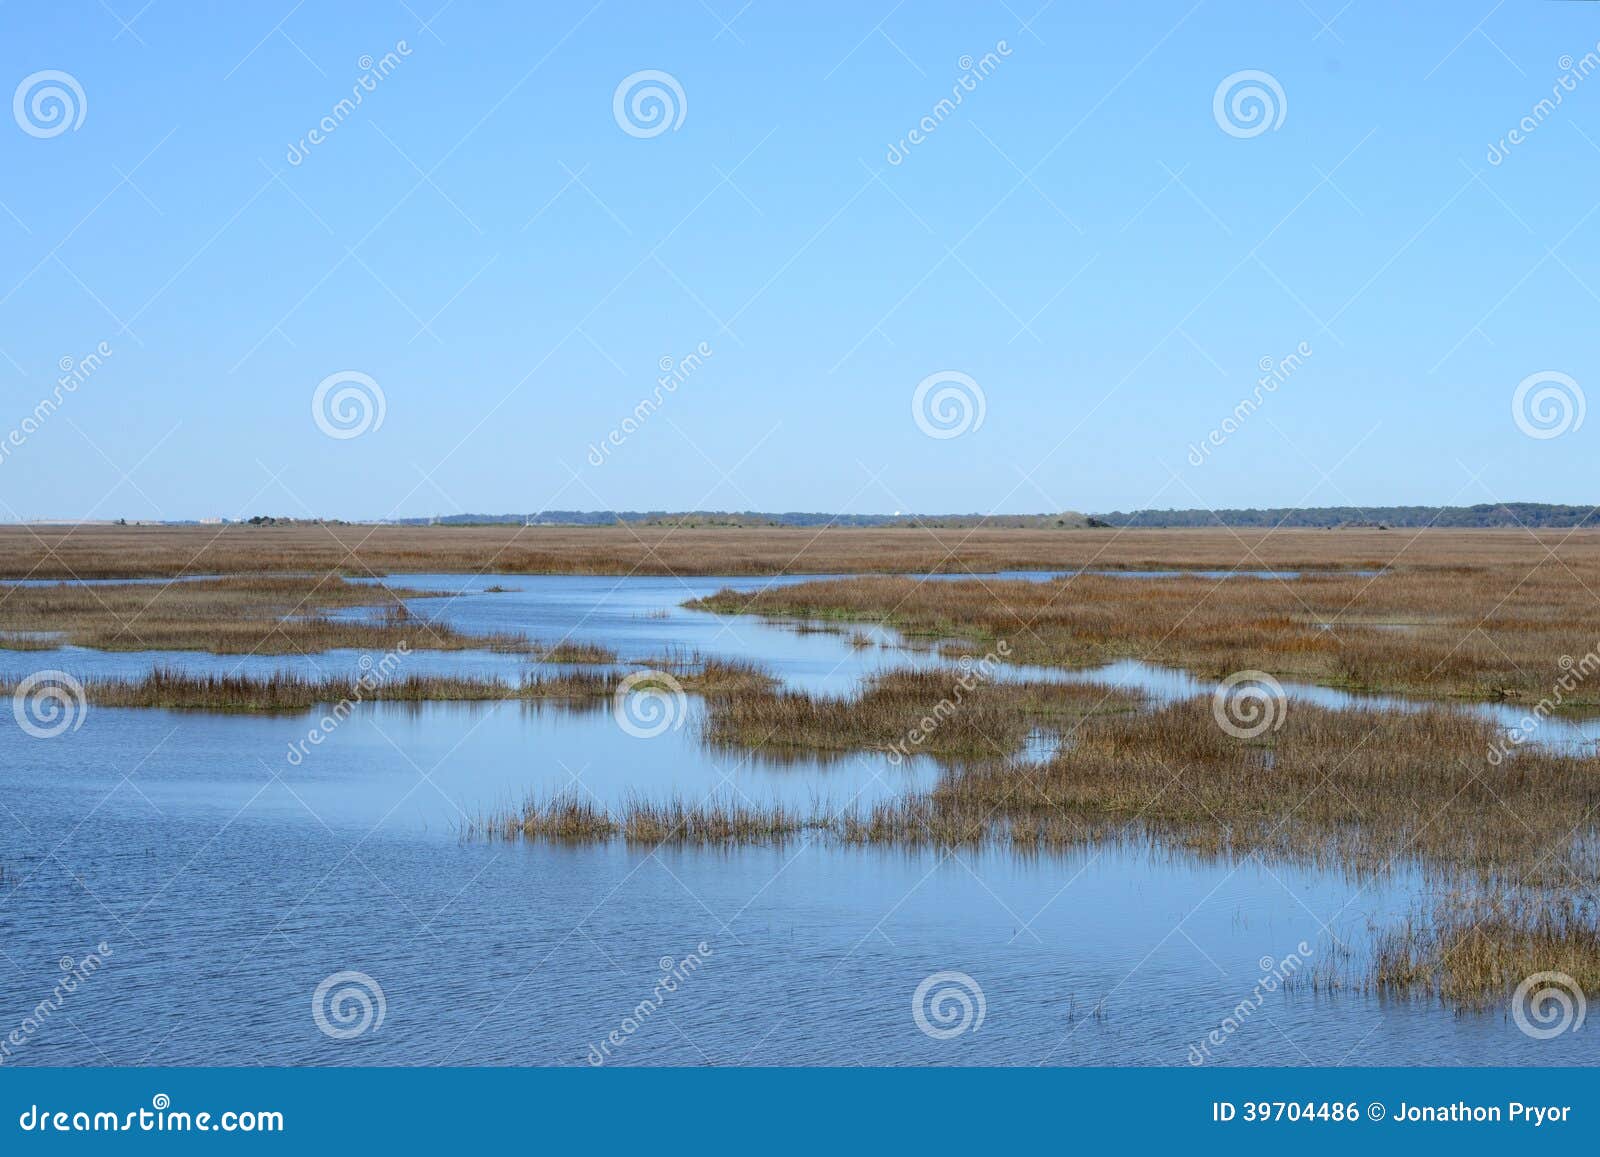 coastal wetlands near a southern coastal island